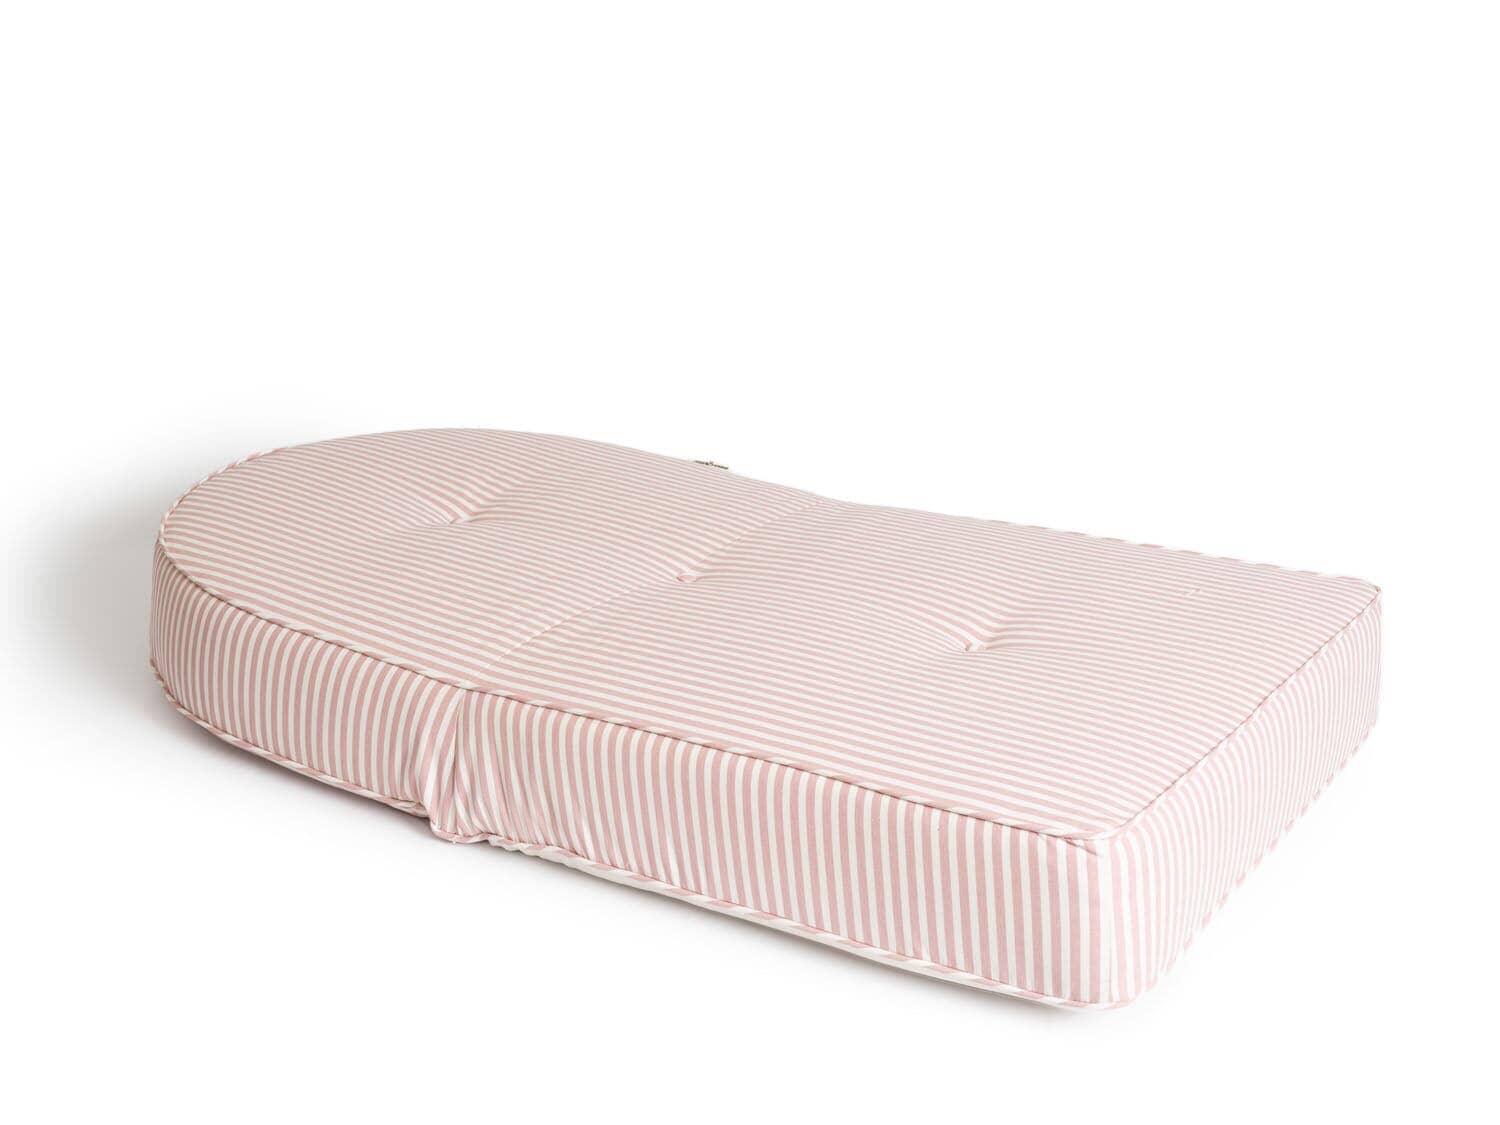 Studio image of pink reclining pillow lounger